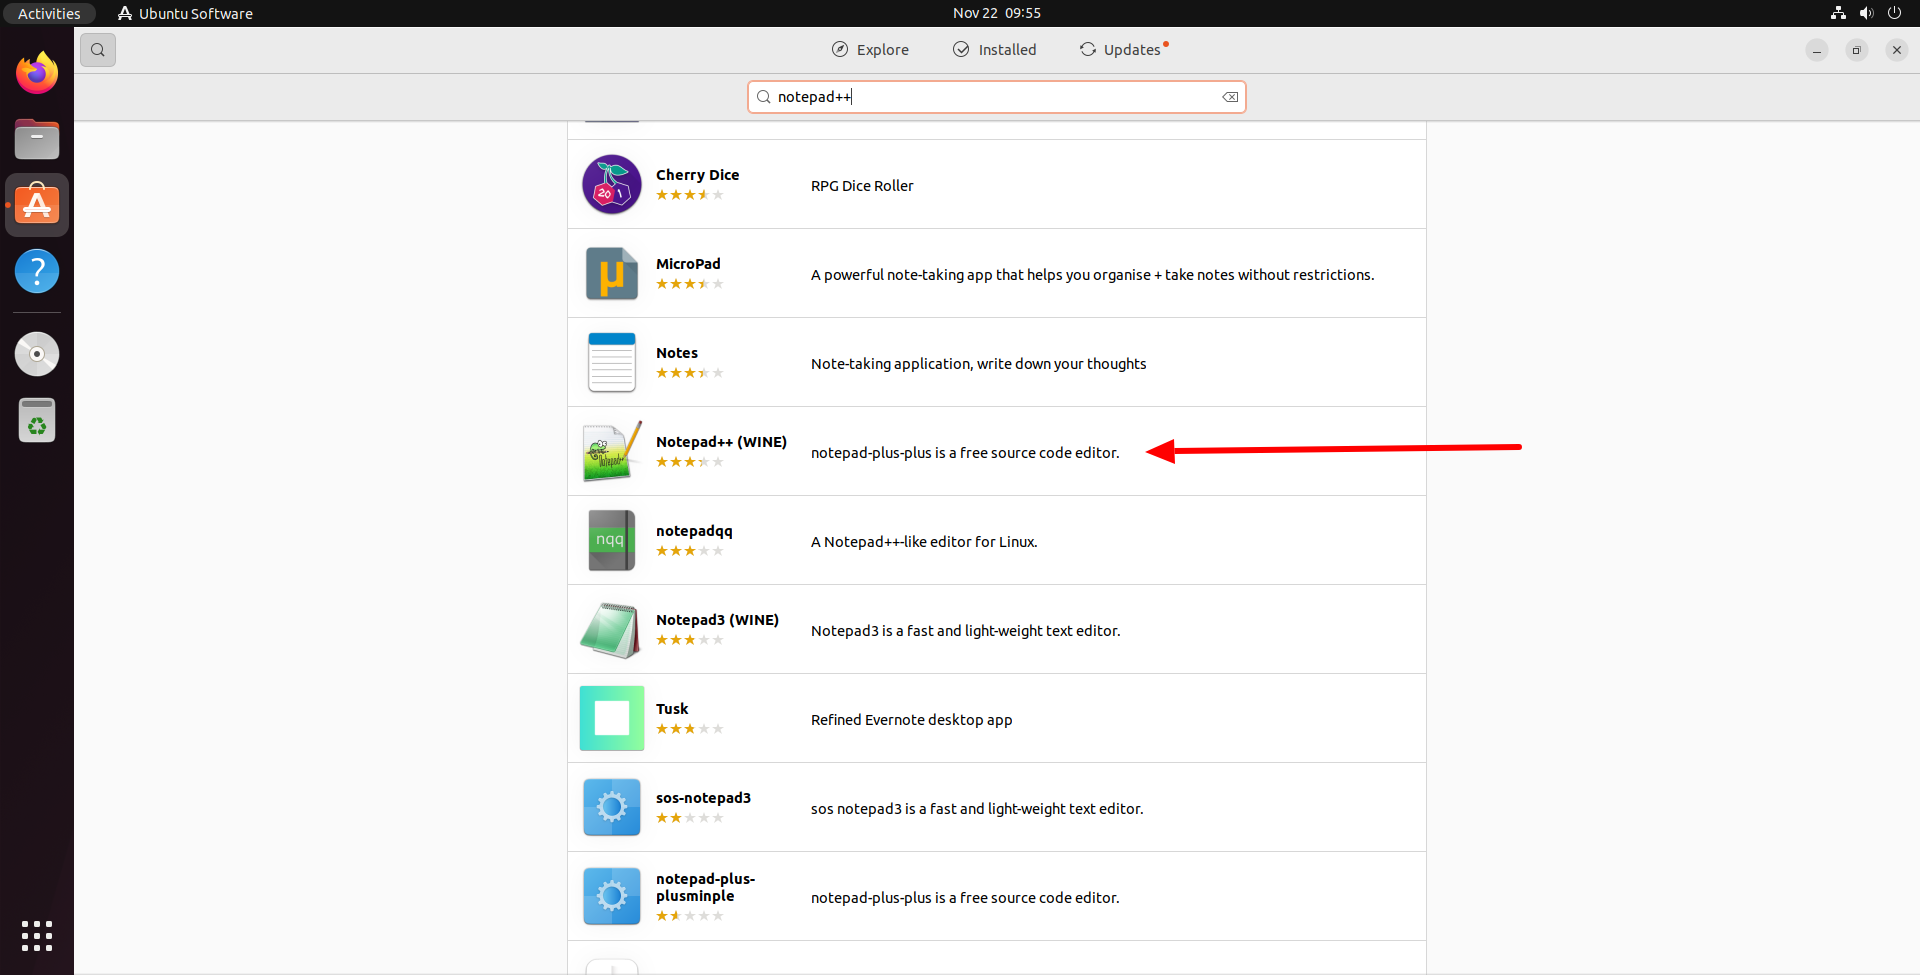 search notepad++ on ubuntu software